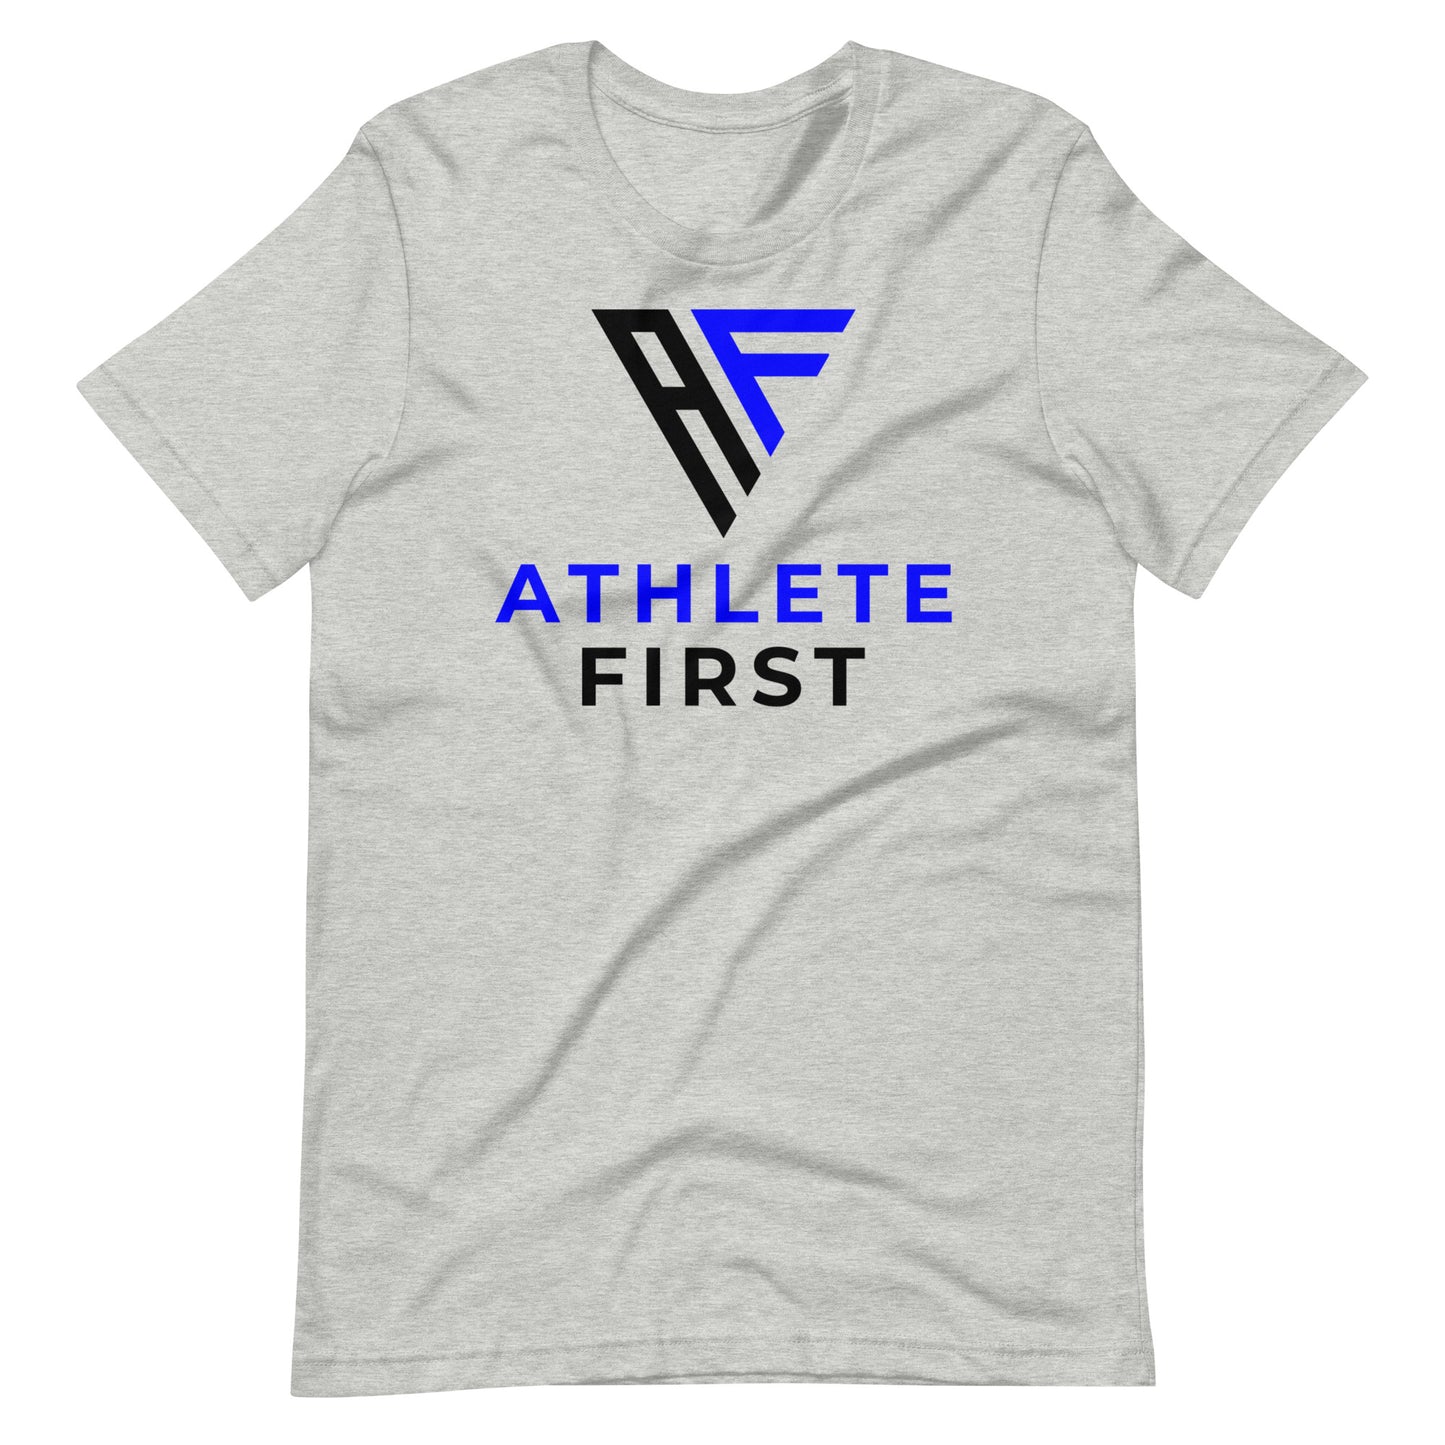 FTR Athlete First: Black and Blue Emblem Tee